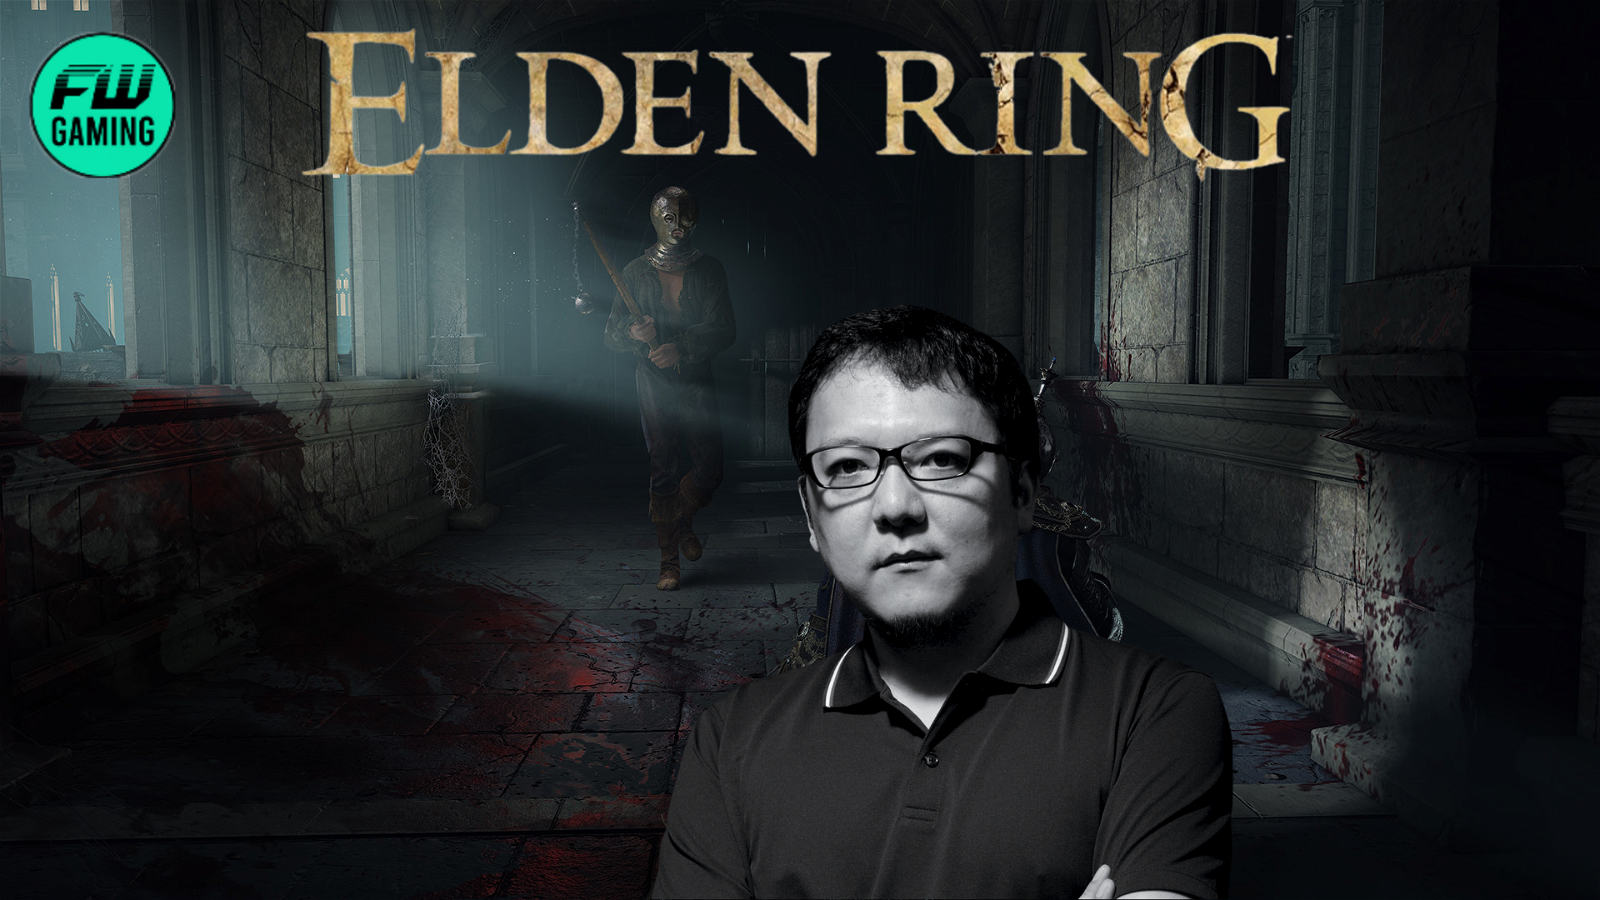 Hidetaka Miyazaki, the director of Elden Ring